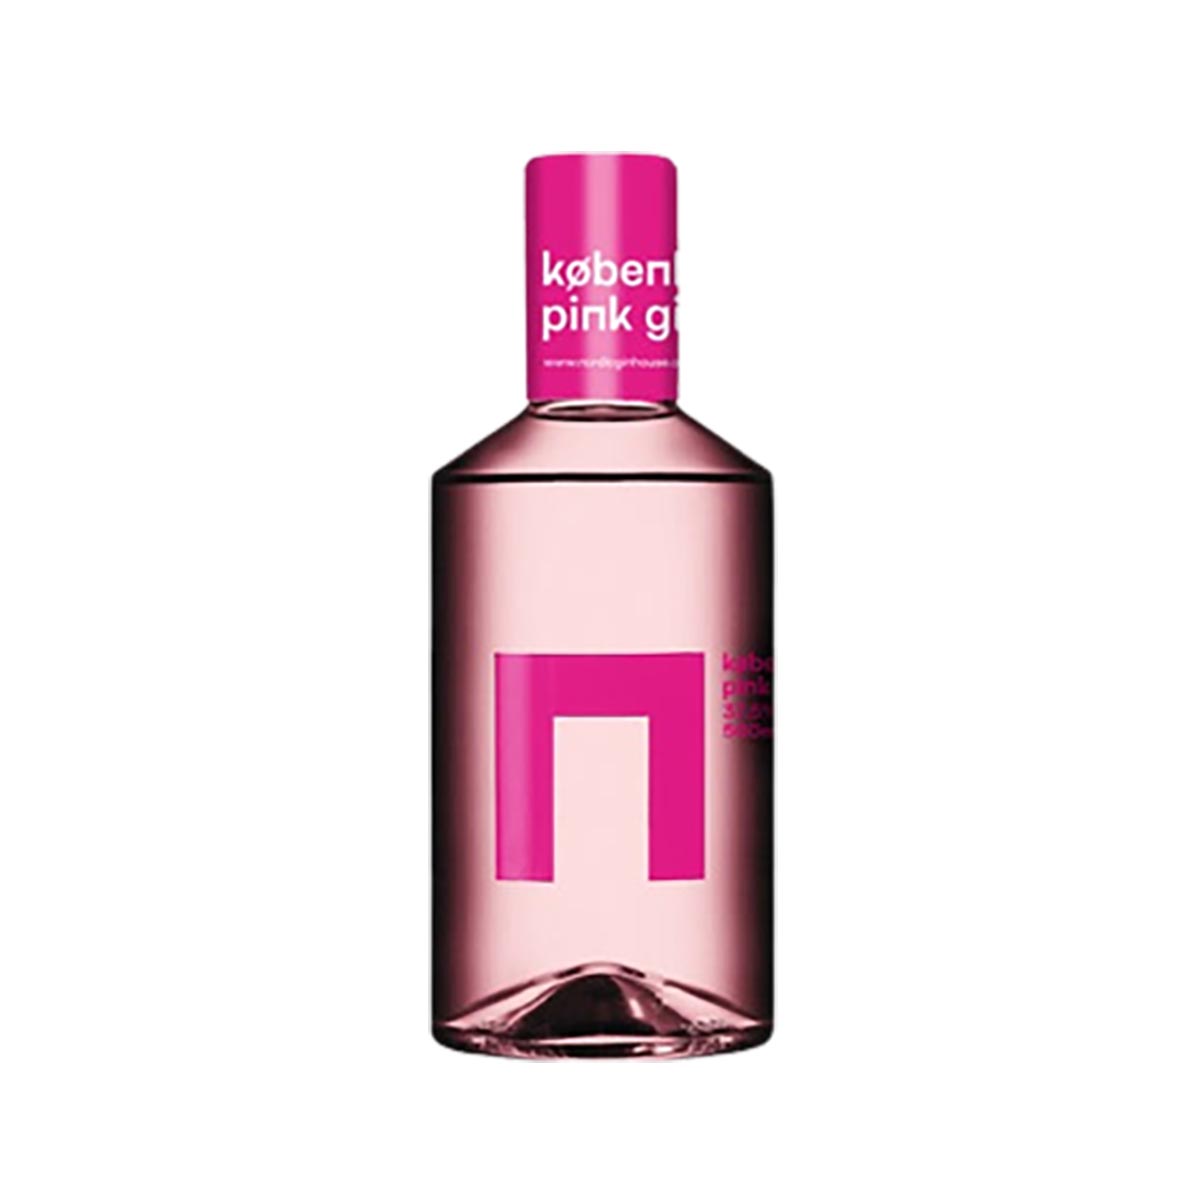 Nordic Gin House København Pink Gin - 37,5% -  50cl - Danmark